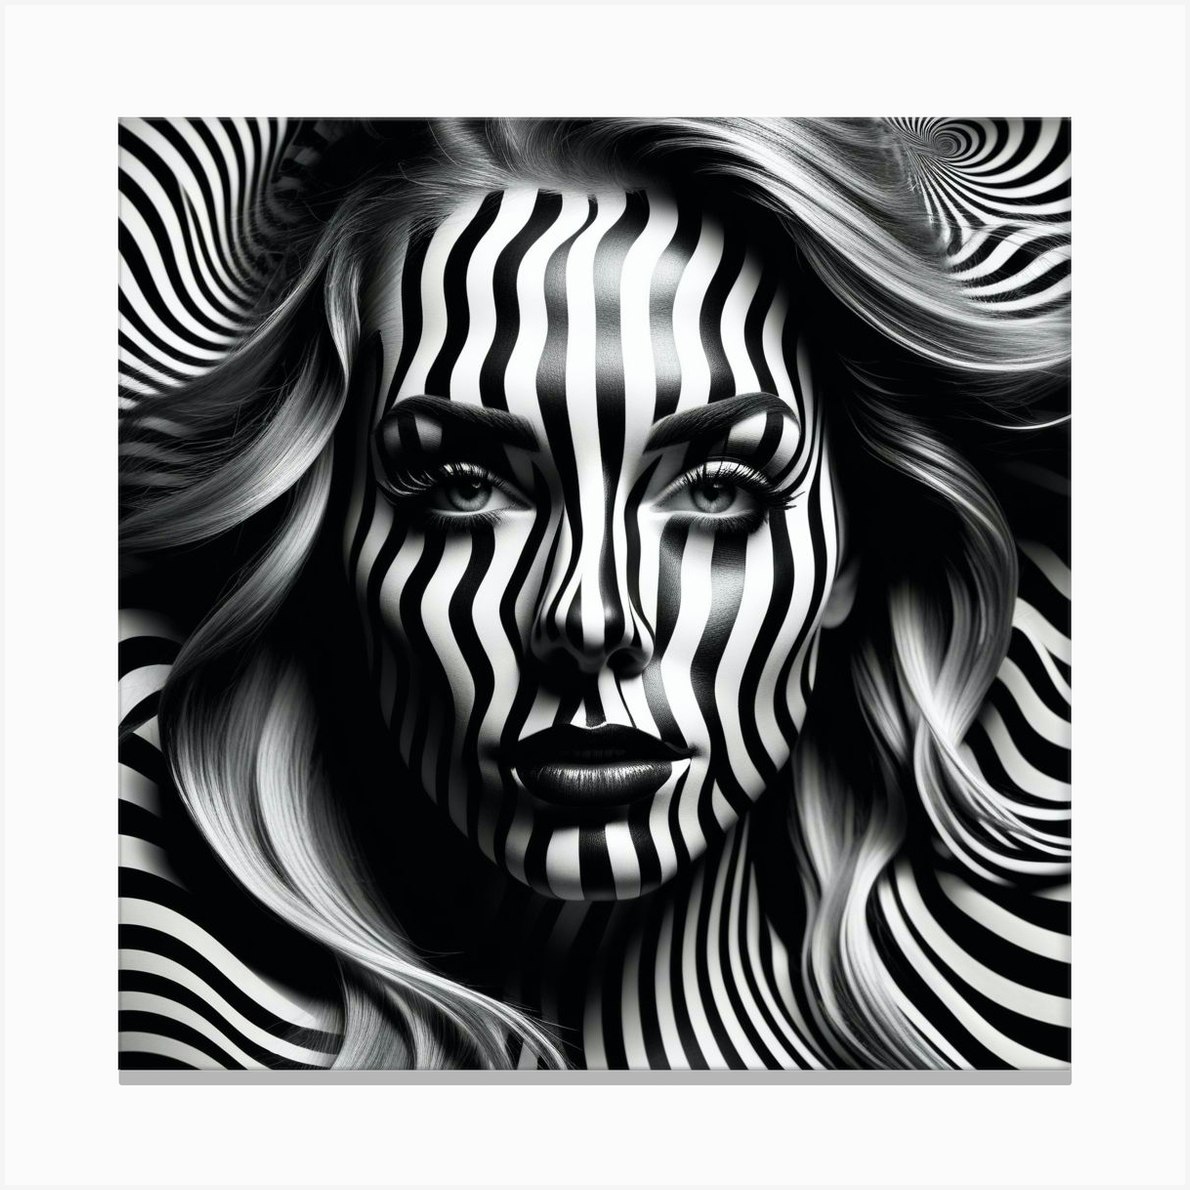 Black And White Zebra Print 1 Canvas Print by ArtfulExplorer - Fy